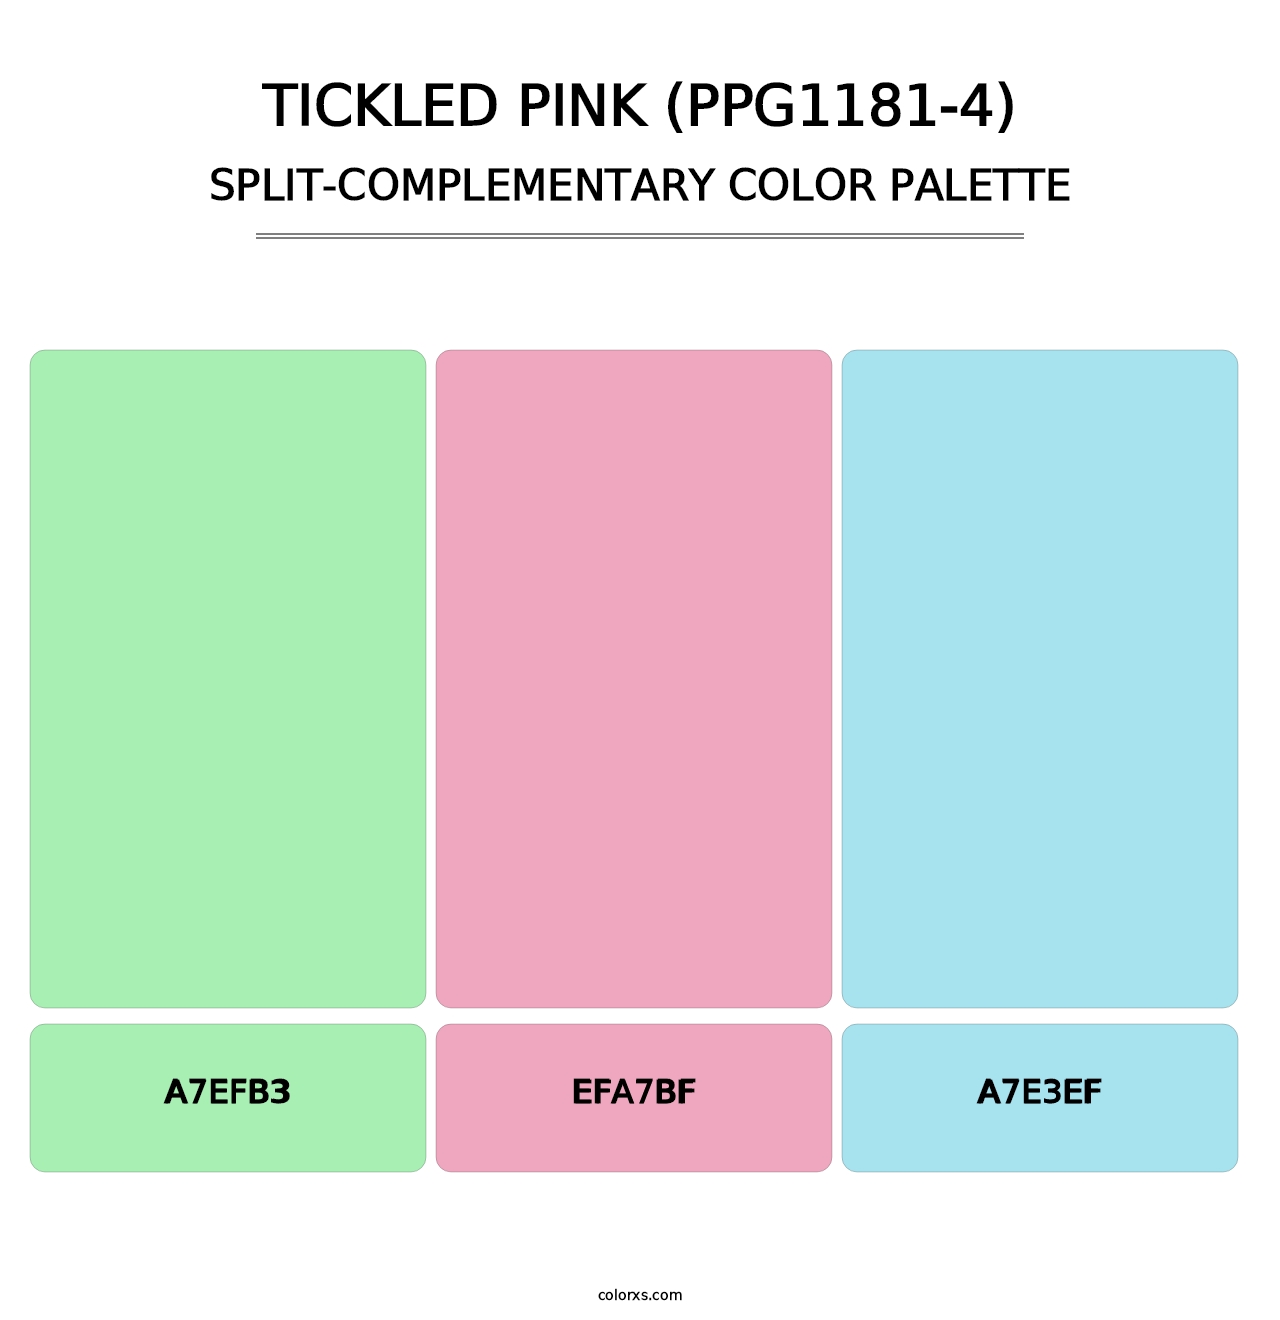 Tickled Pink (PPG1181-4) - Split-Complementary Color Palette